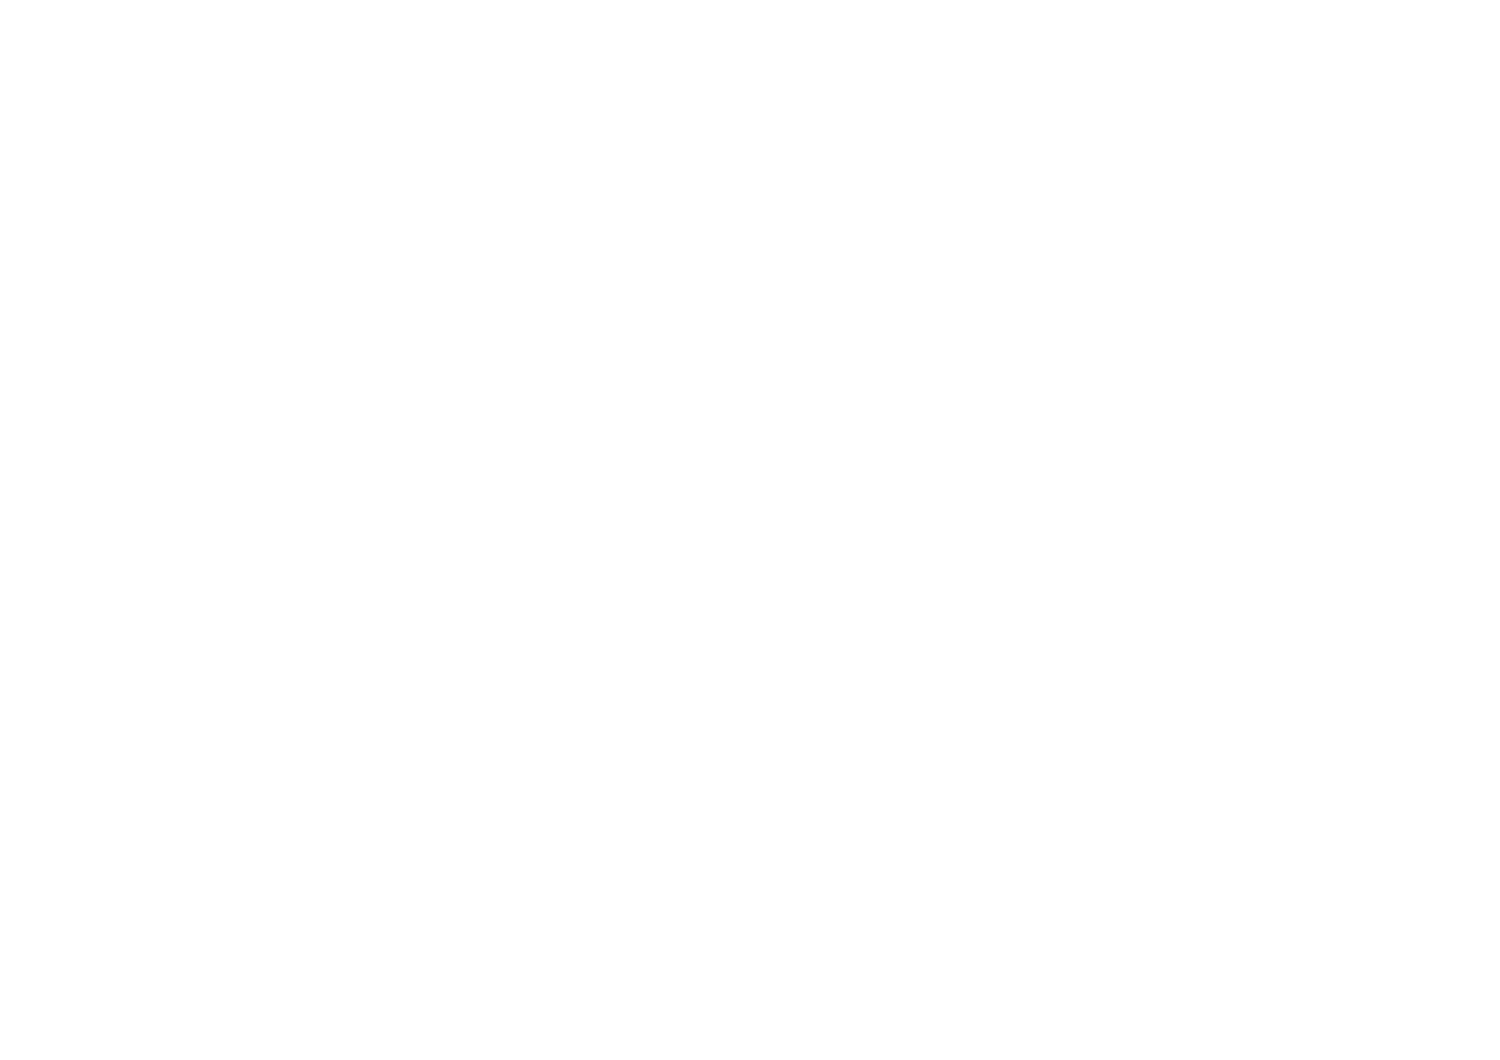 Luke Fenwick - Life Coach Melbourne